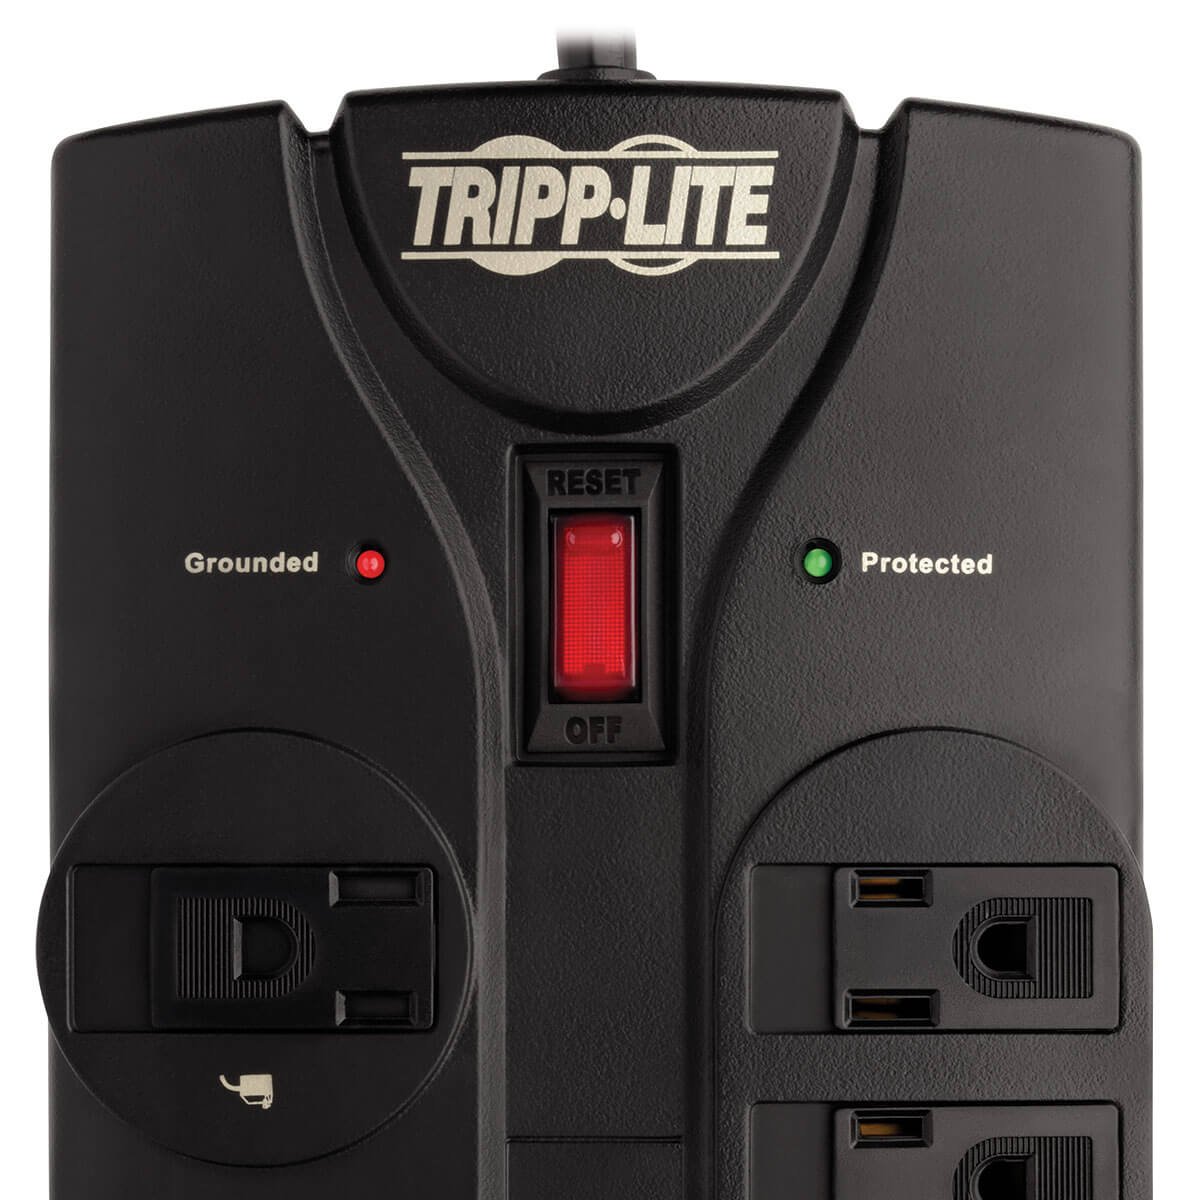 Tripp Lite 12 Outlet Surge Protector Power Strip, 8ft Cord, Right-Angle Plug, Tel/Modem/Coax/Ethernet Protection, RJ11, RJ45, & $250,000 INSURANCE (TLP1208SAT) Black